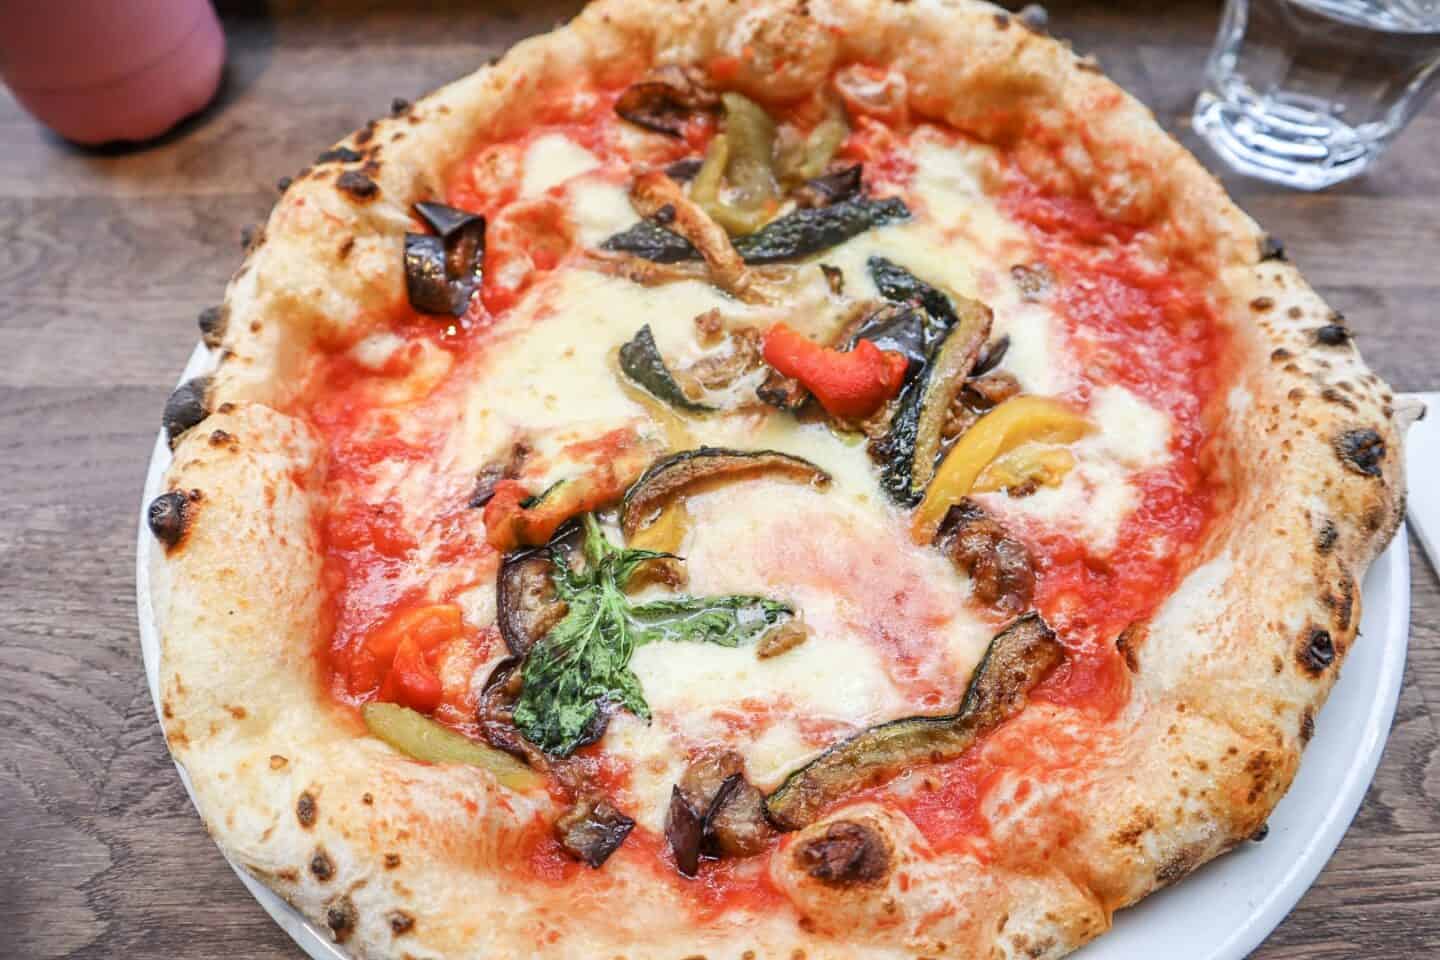 Pizza from Rossopomodoro in Covent Garden | covent garden london guide